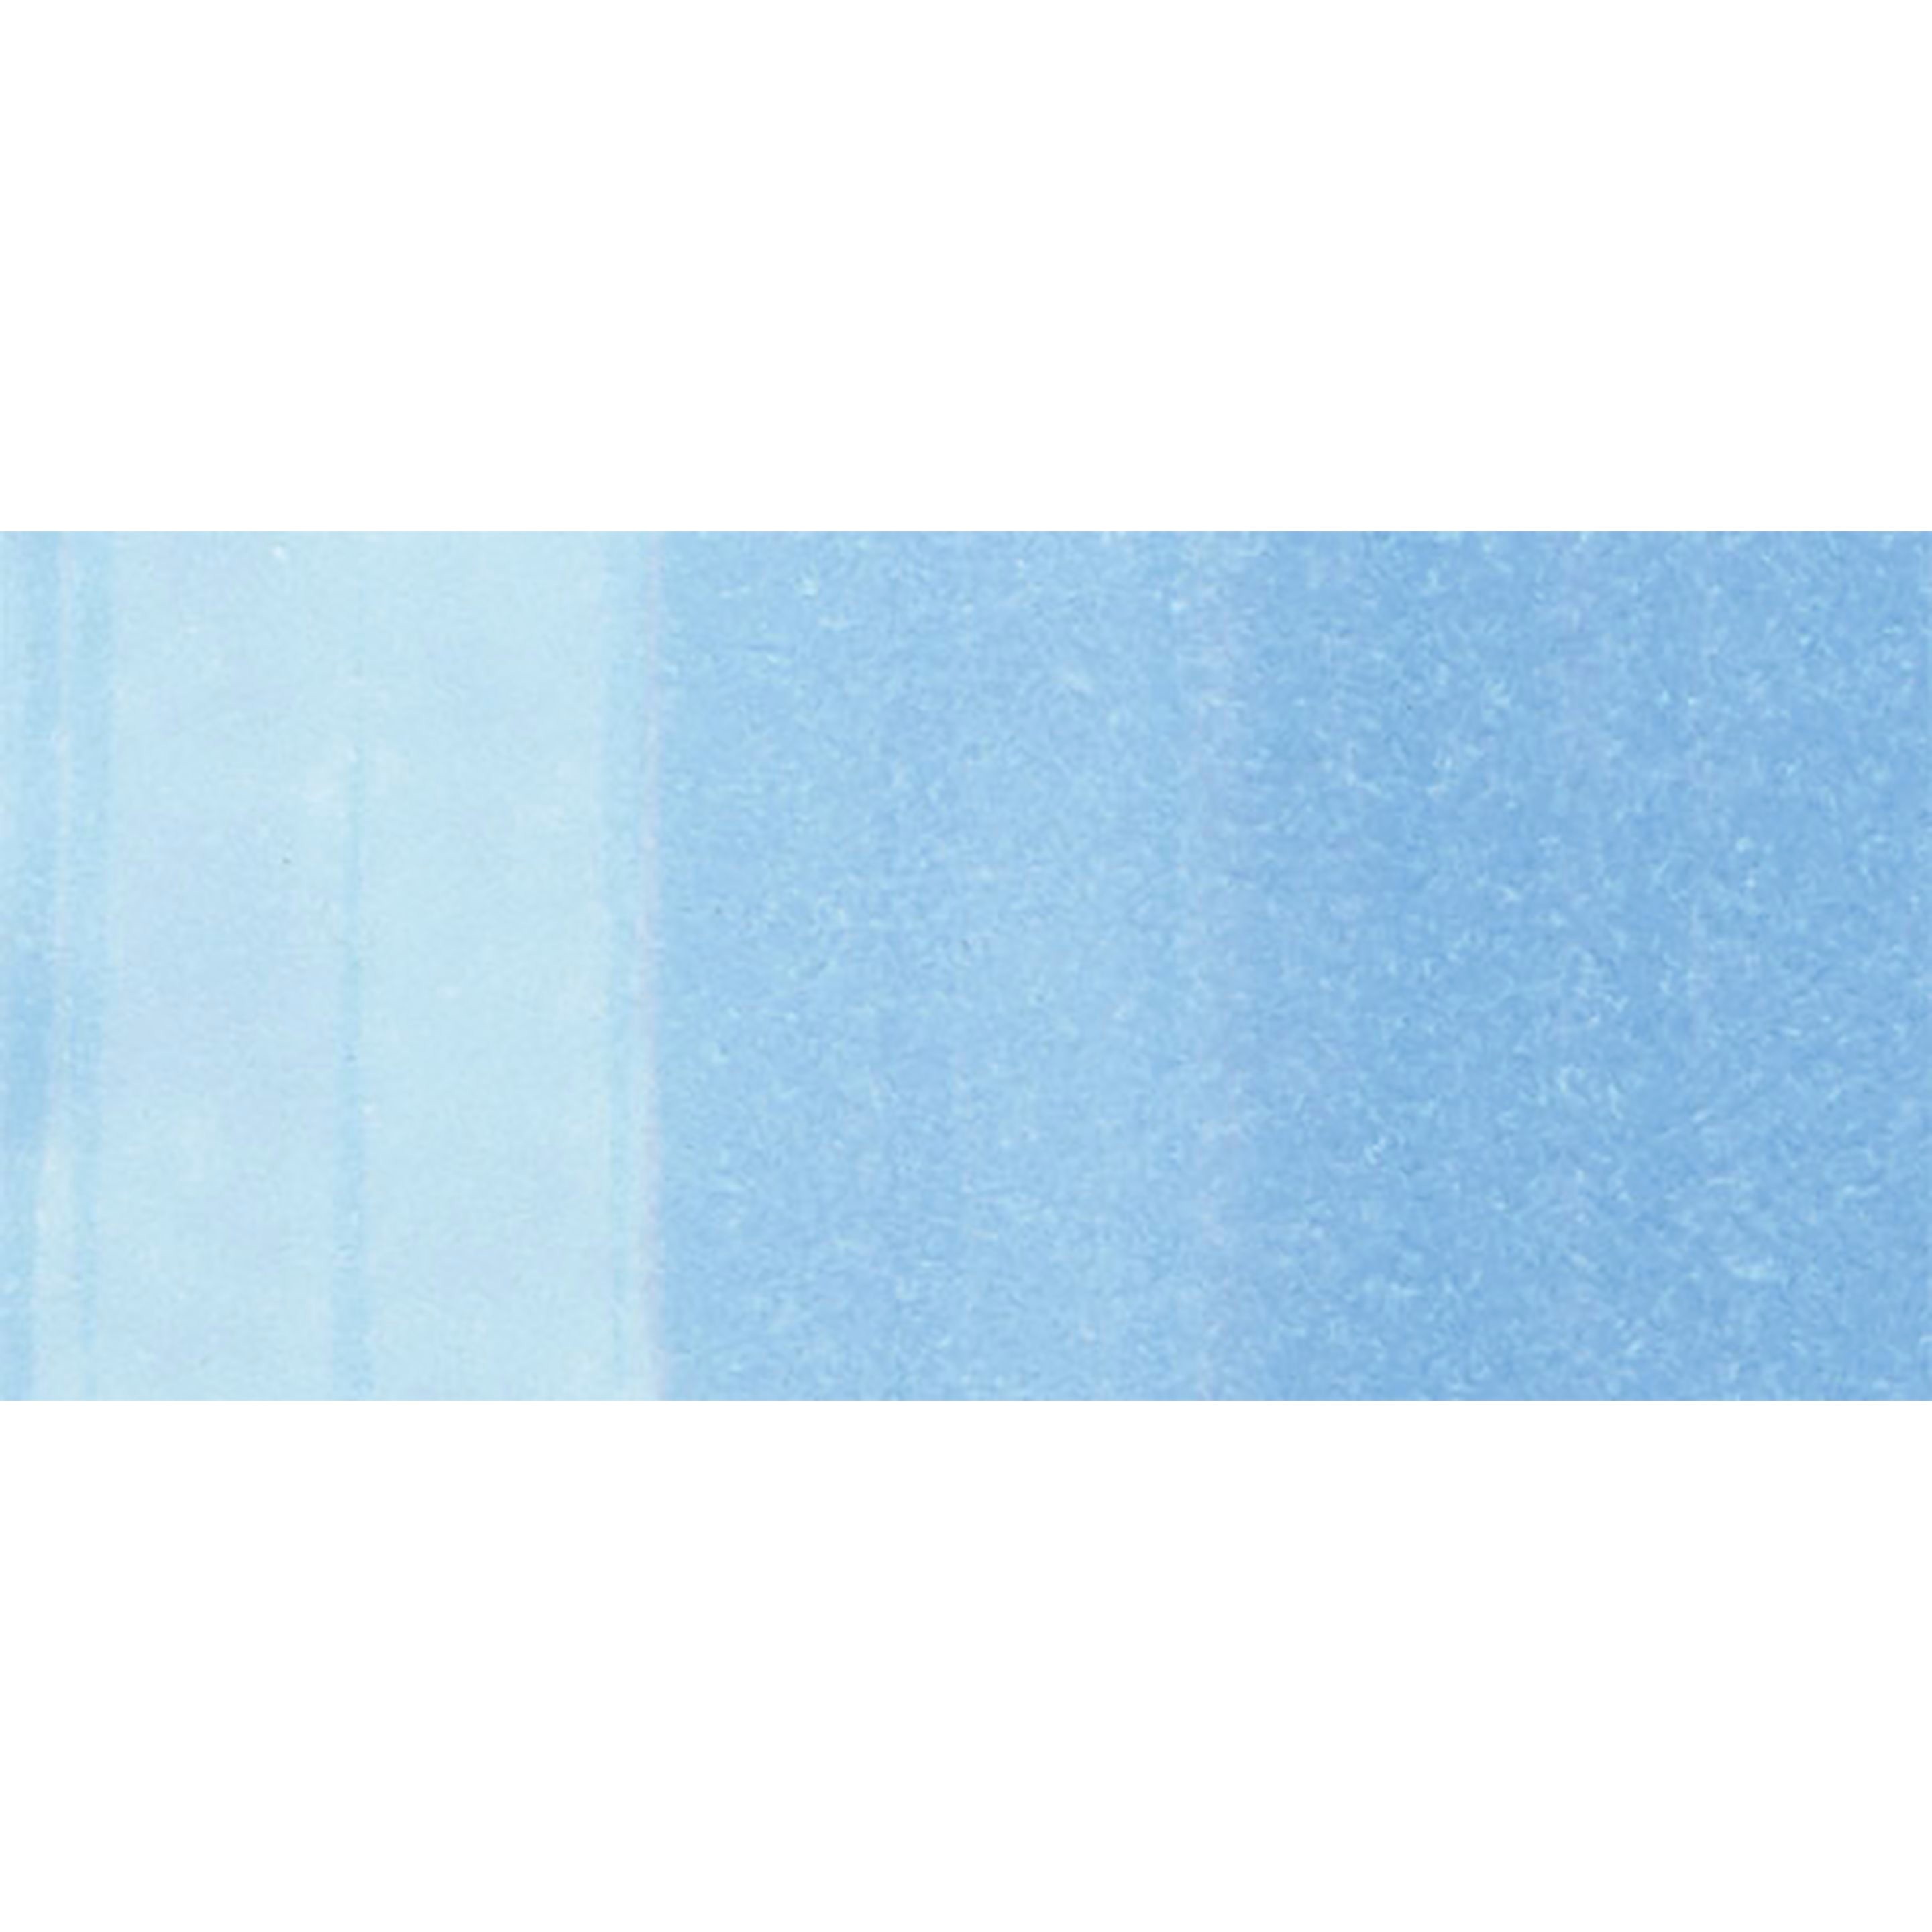 COPIC Marker Ciao 22075222 B12 - Ice Blue